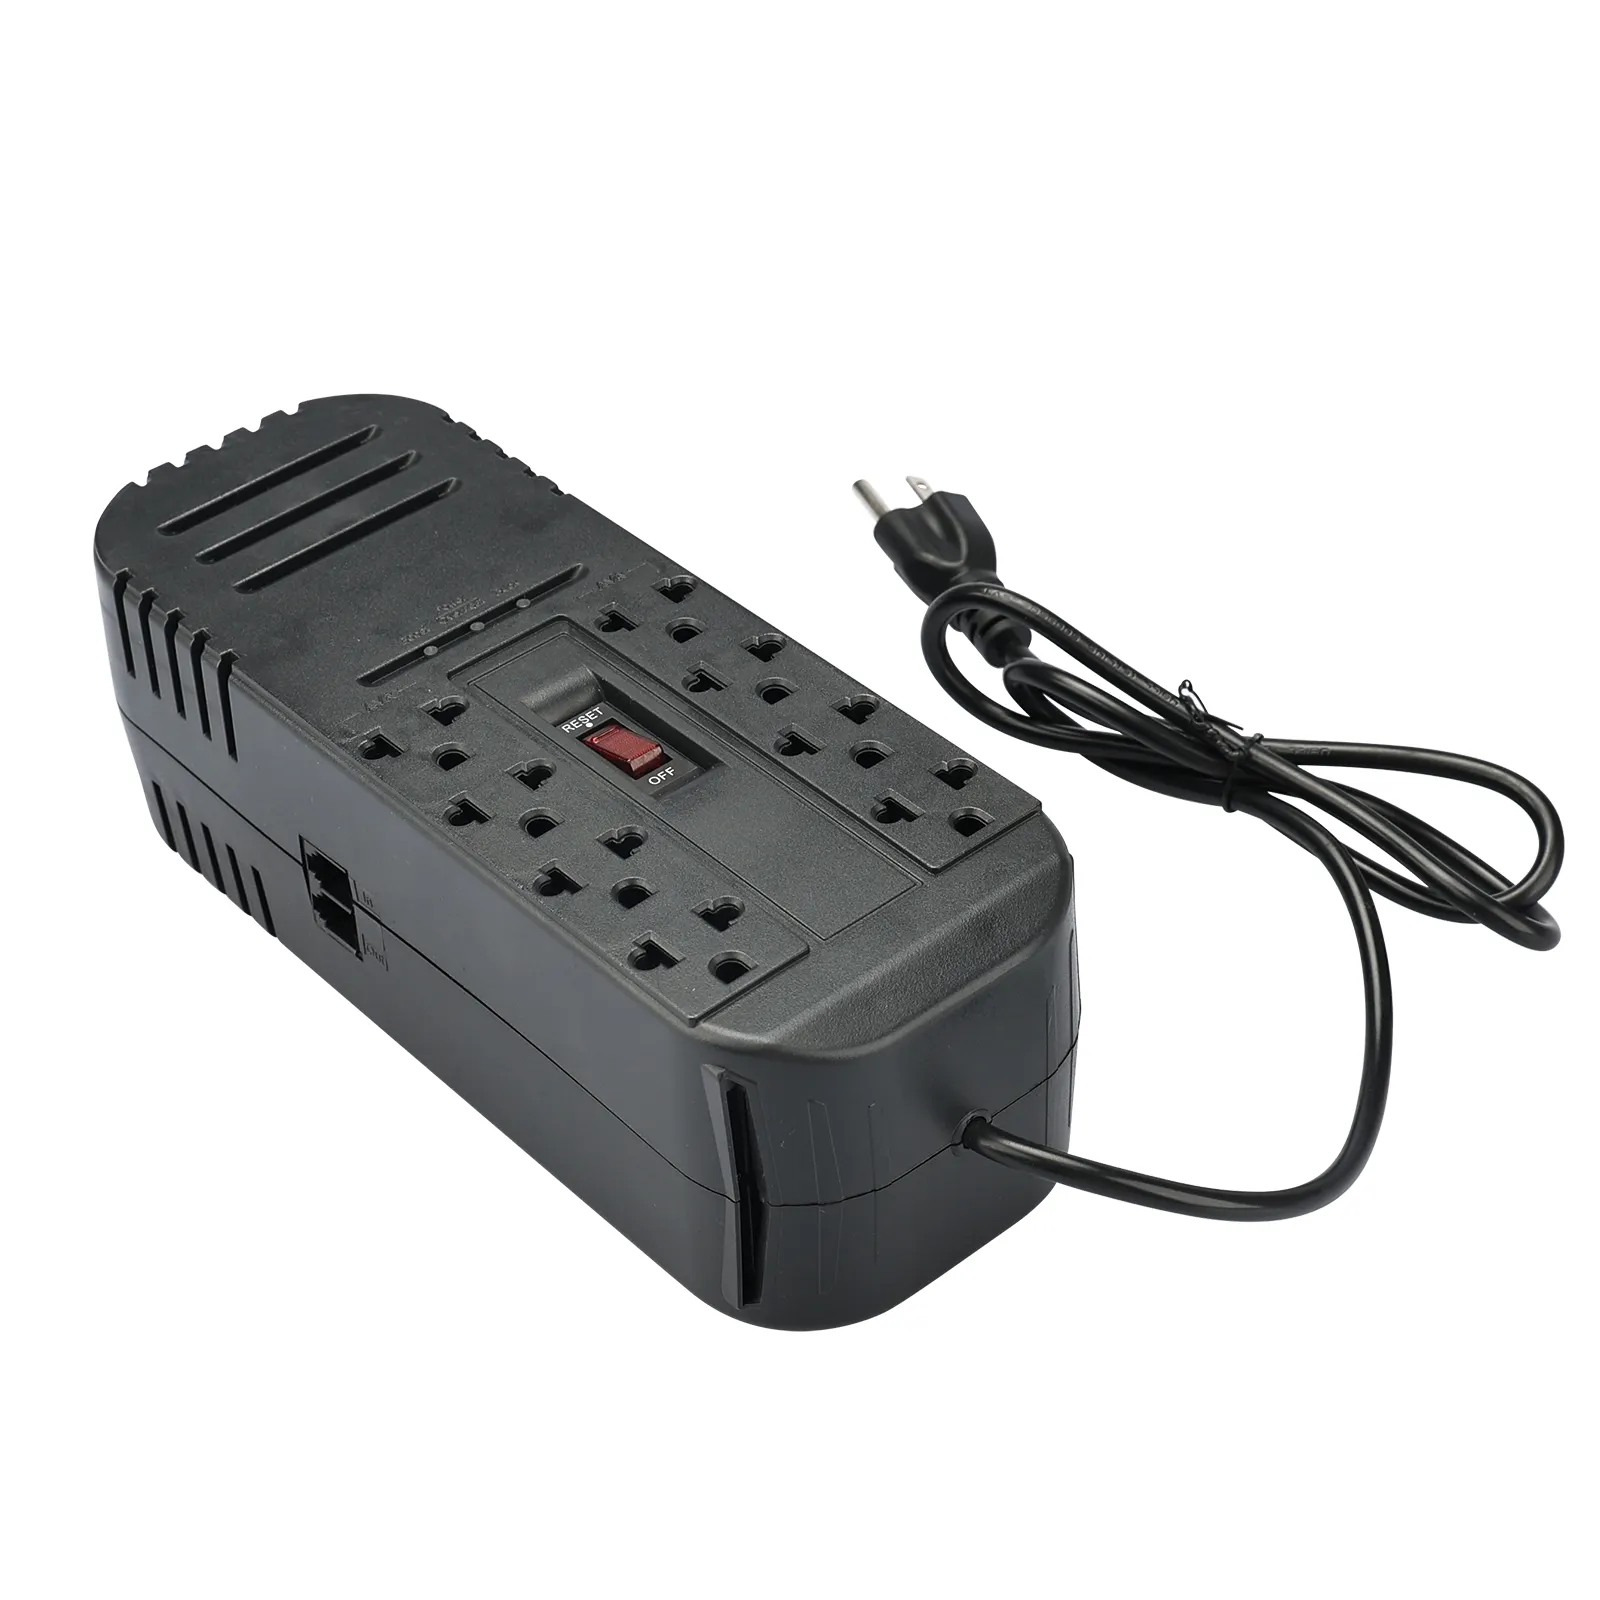 AVR 600VA/ 1000VA US Socket Power Regulation Estabilizador Protector De Voltaje Regulador De Voltaje automático con cargador USB